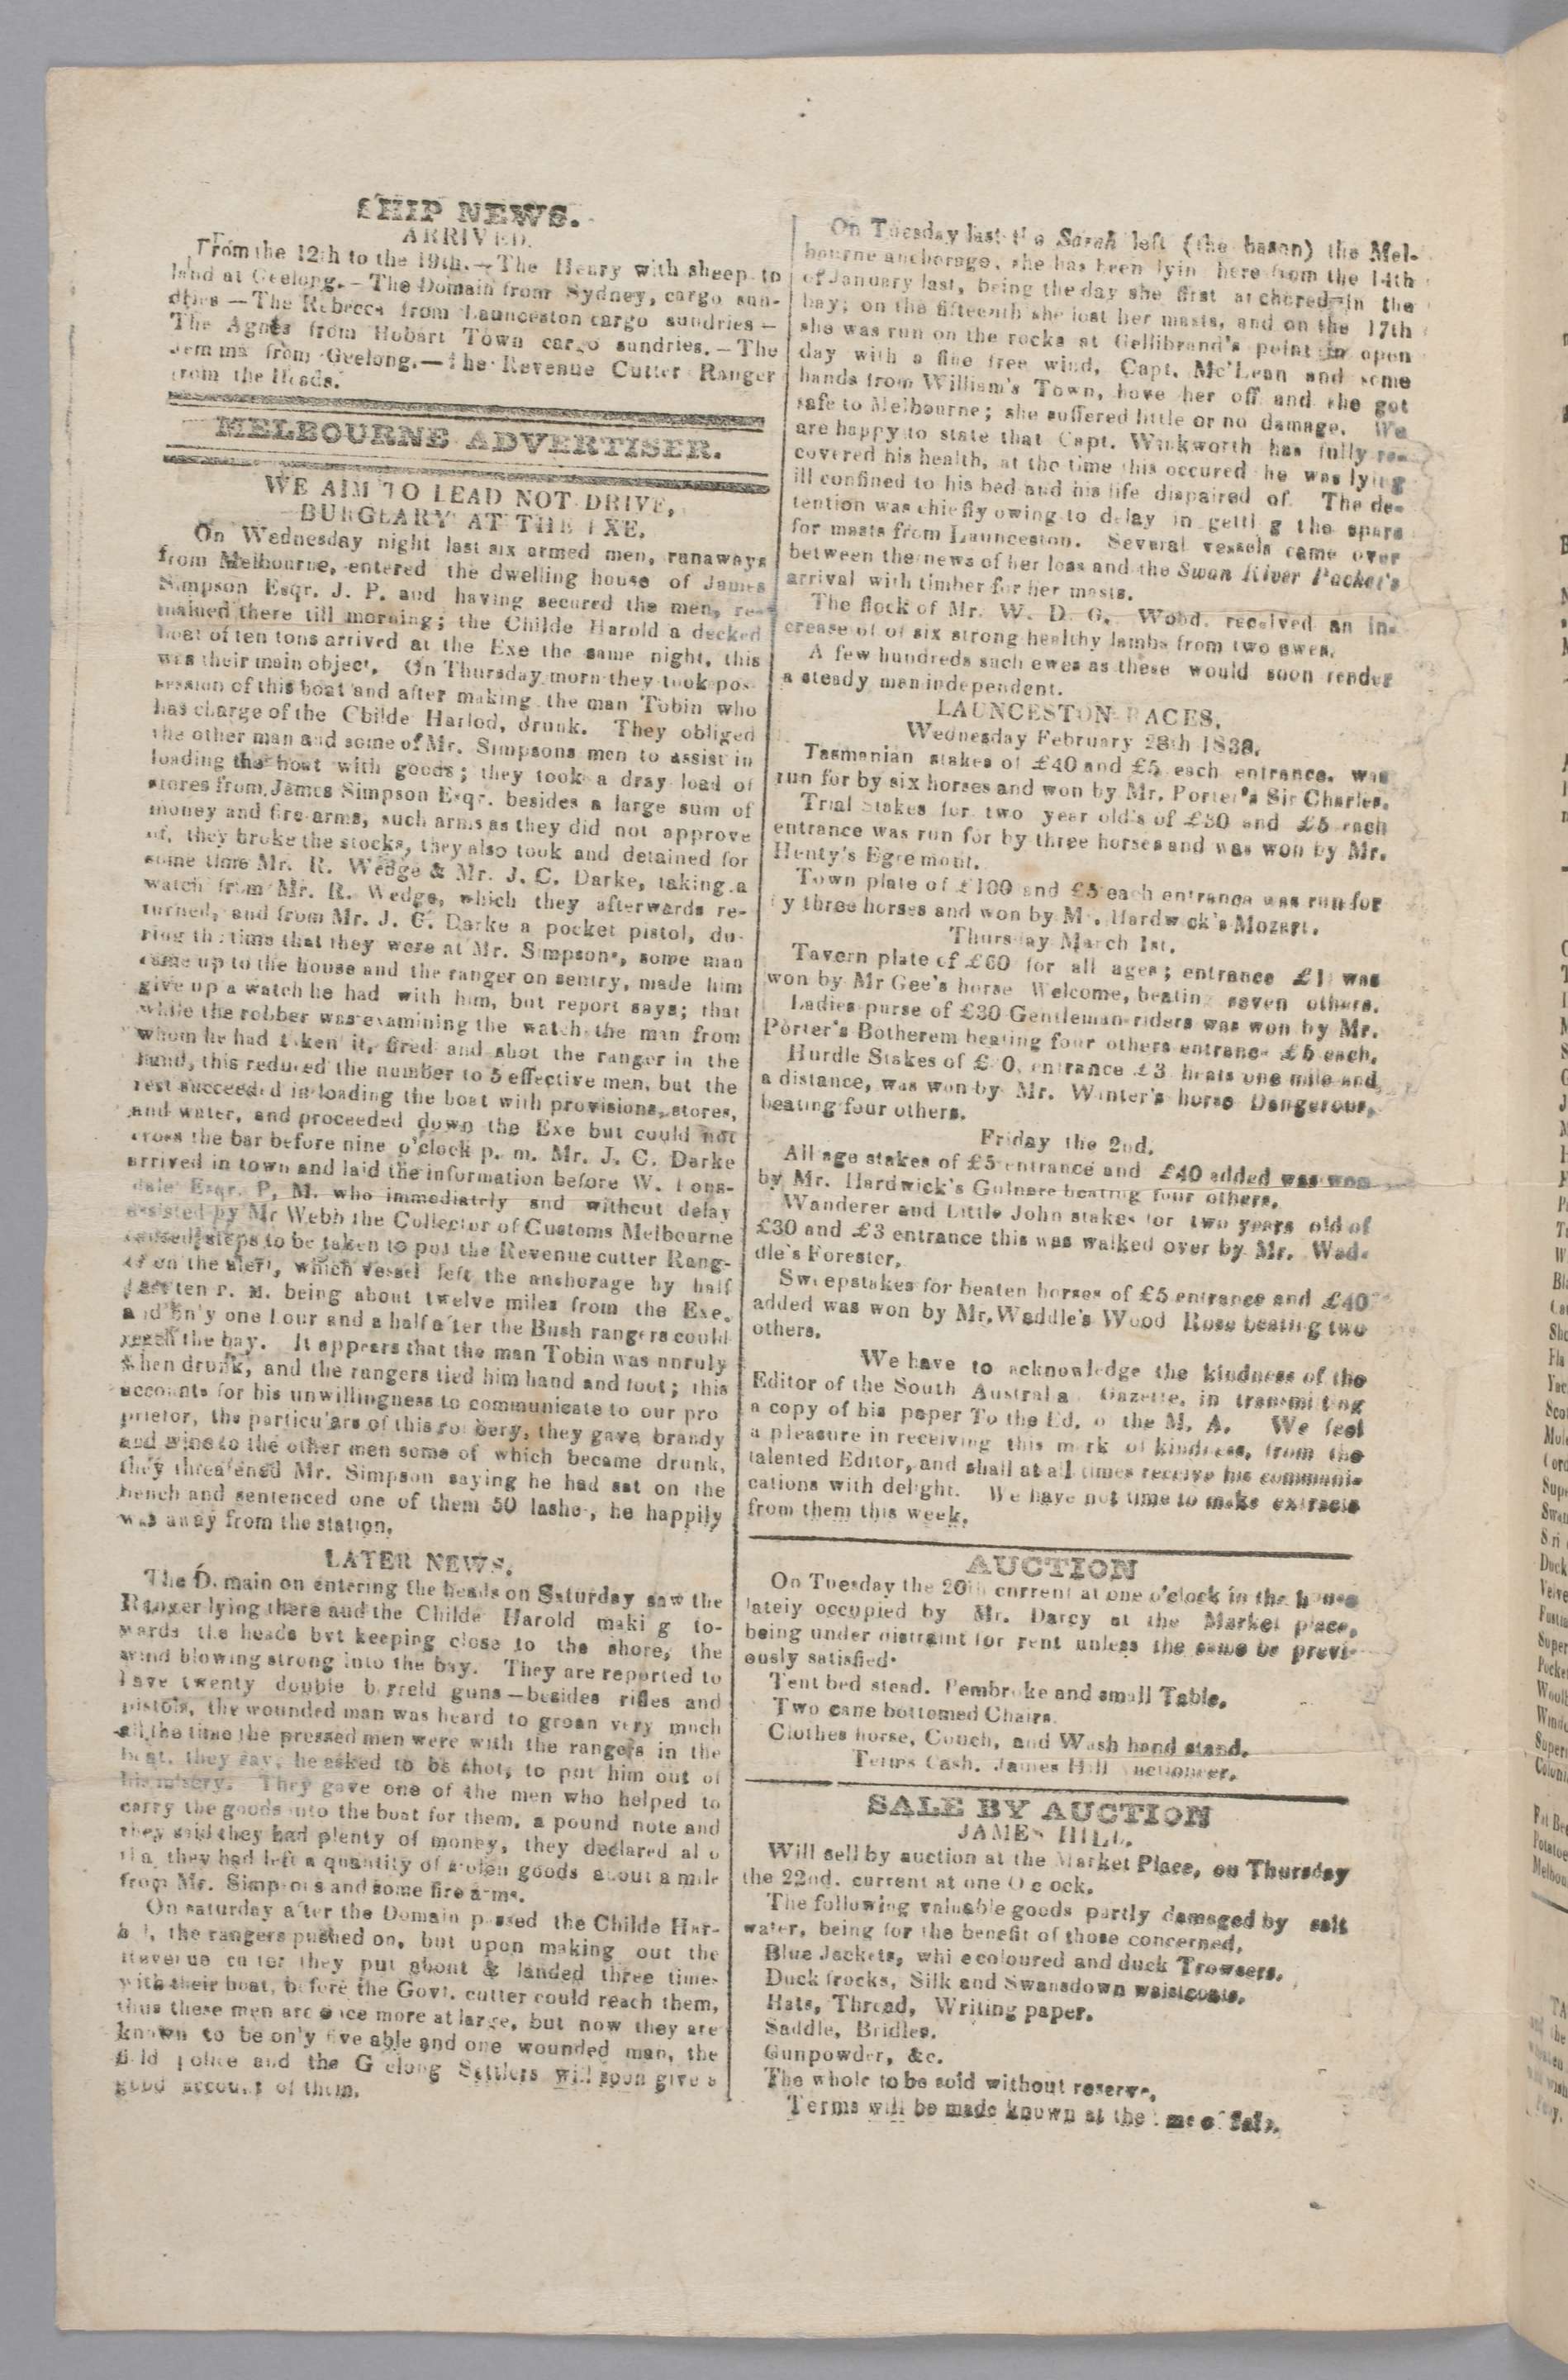 Melbourne Advertiser, manuscript 